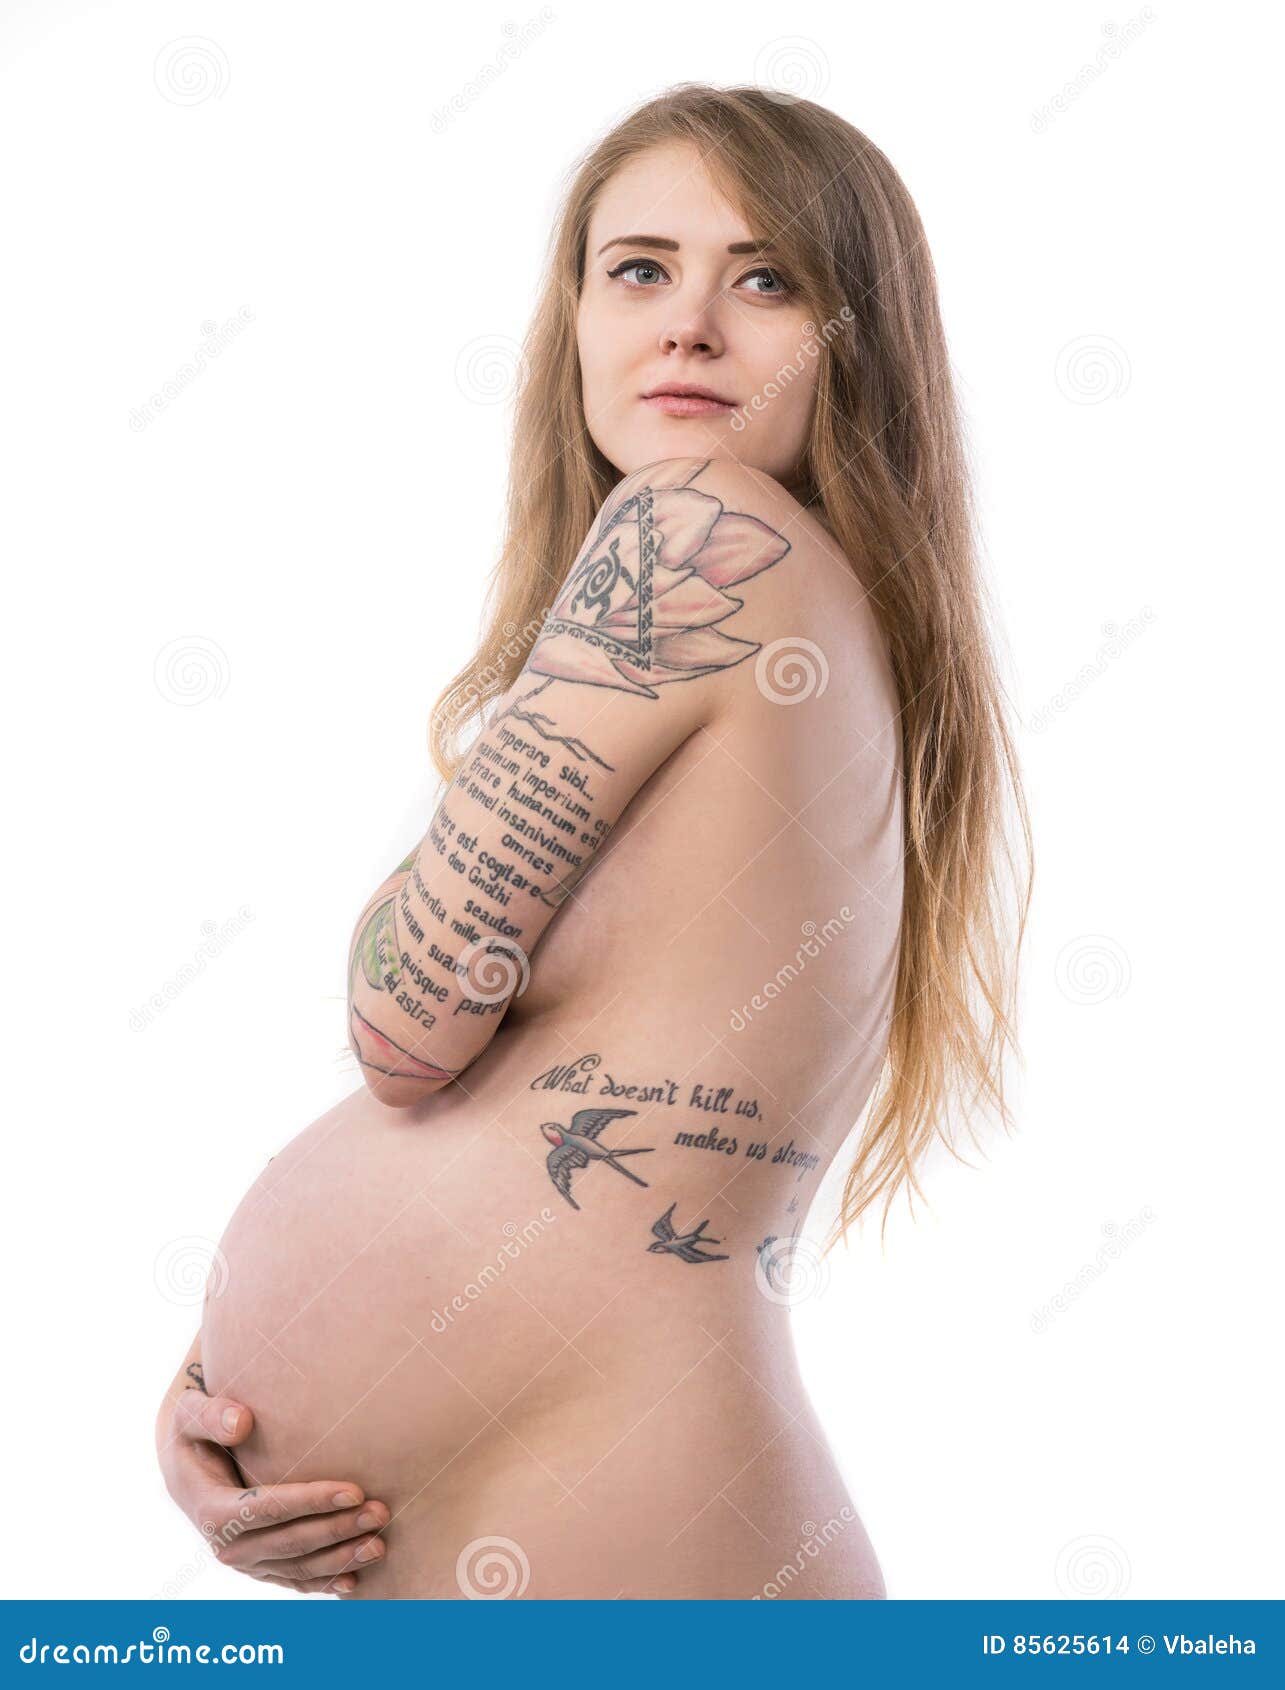 Pregnant girls posing nude